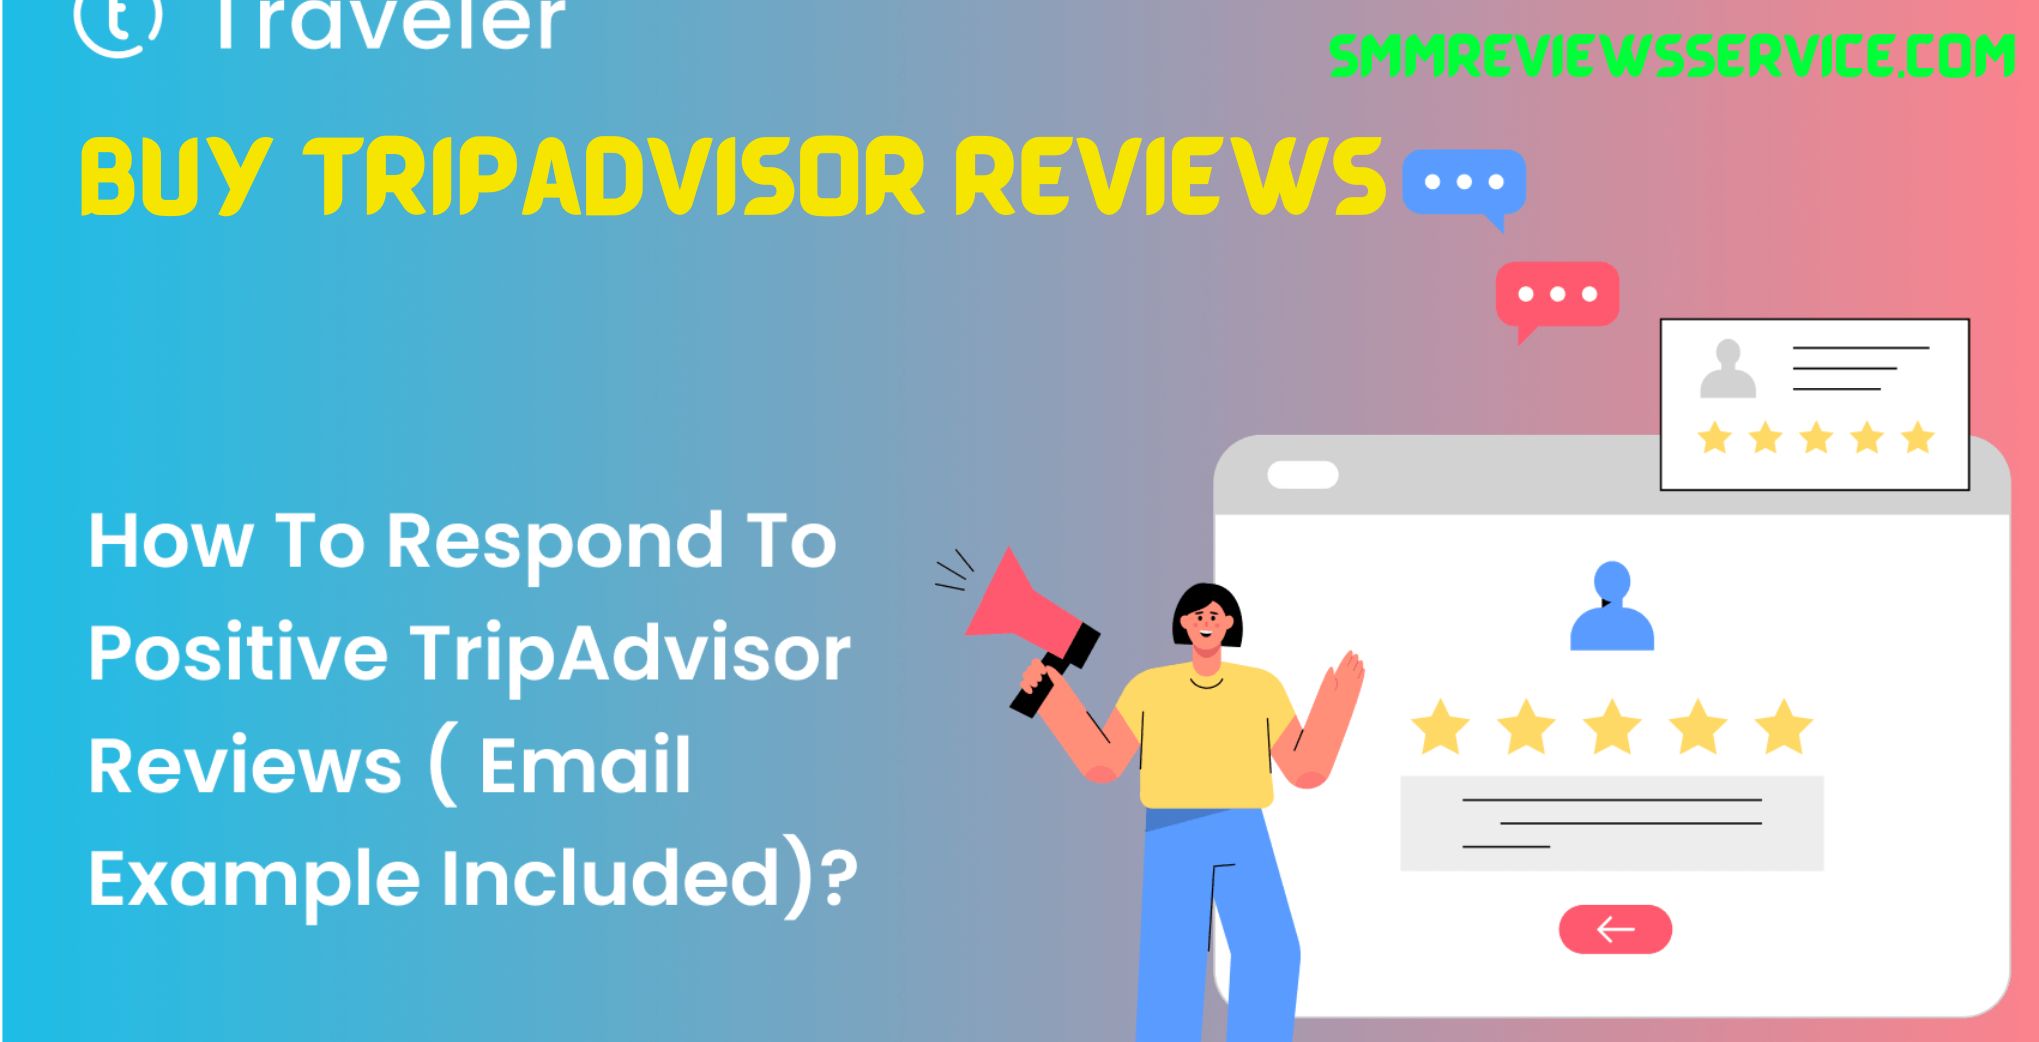 Buy Tripadvisor Reviews